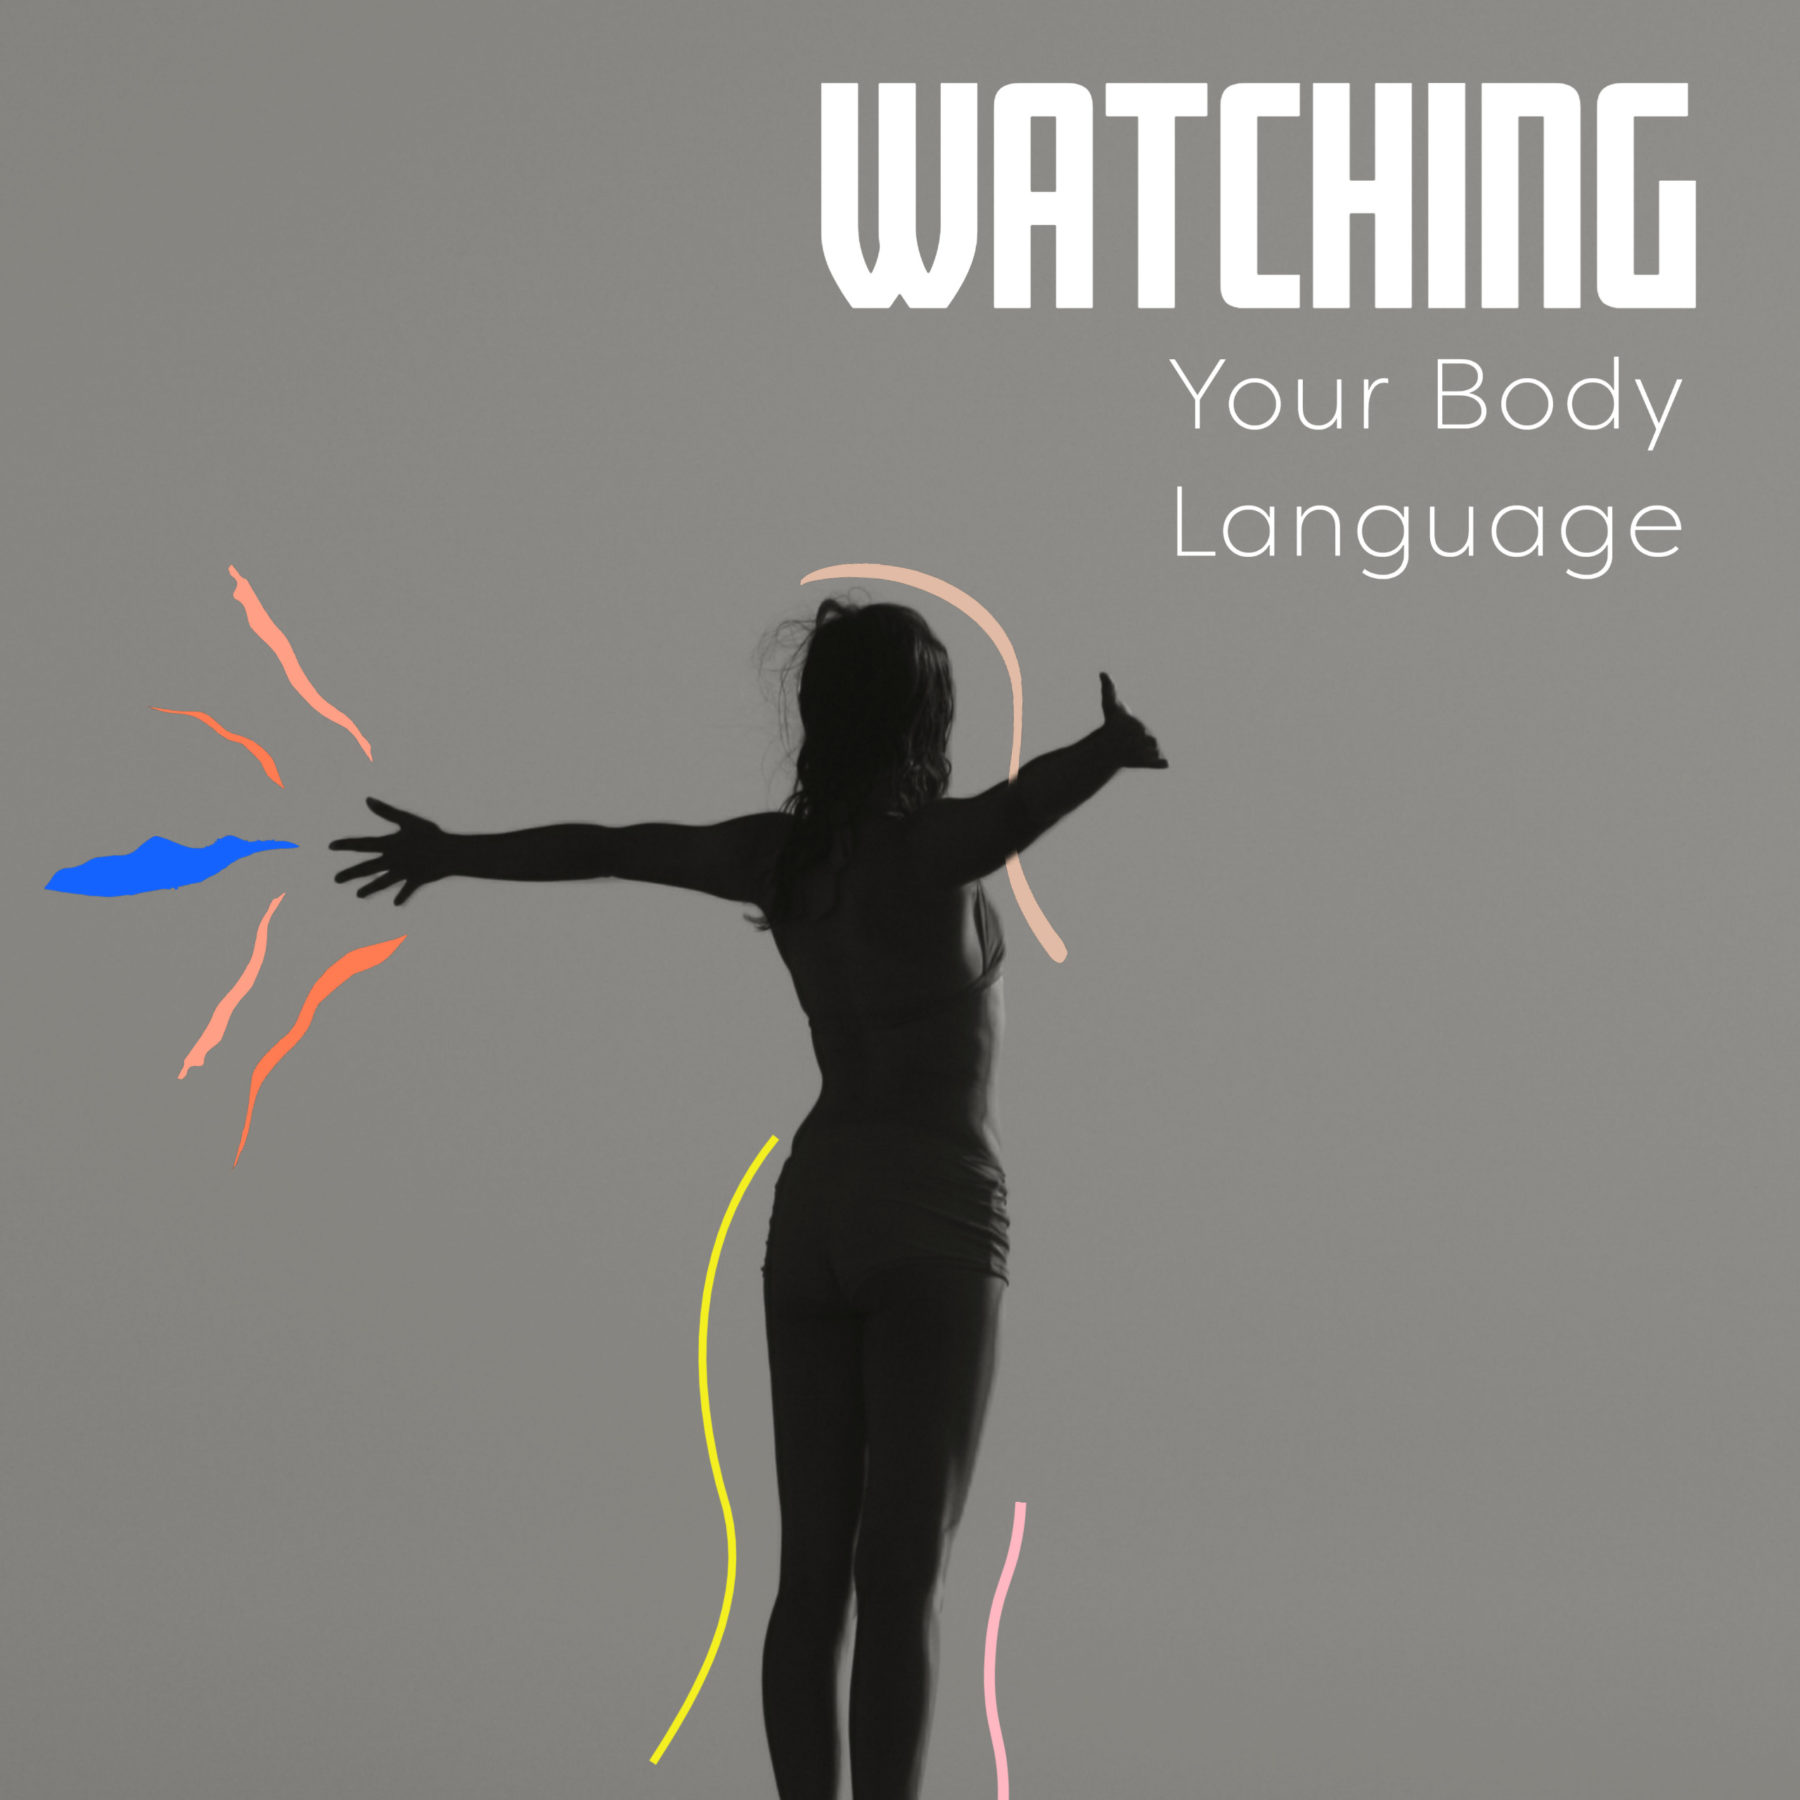 watching your body language